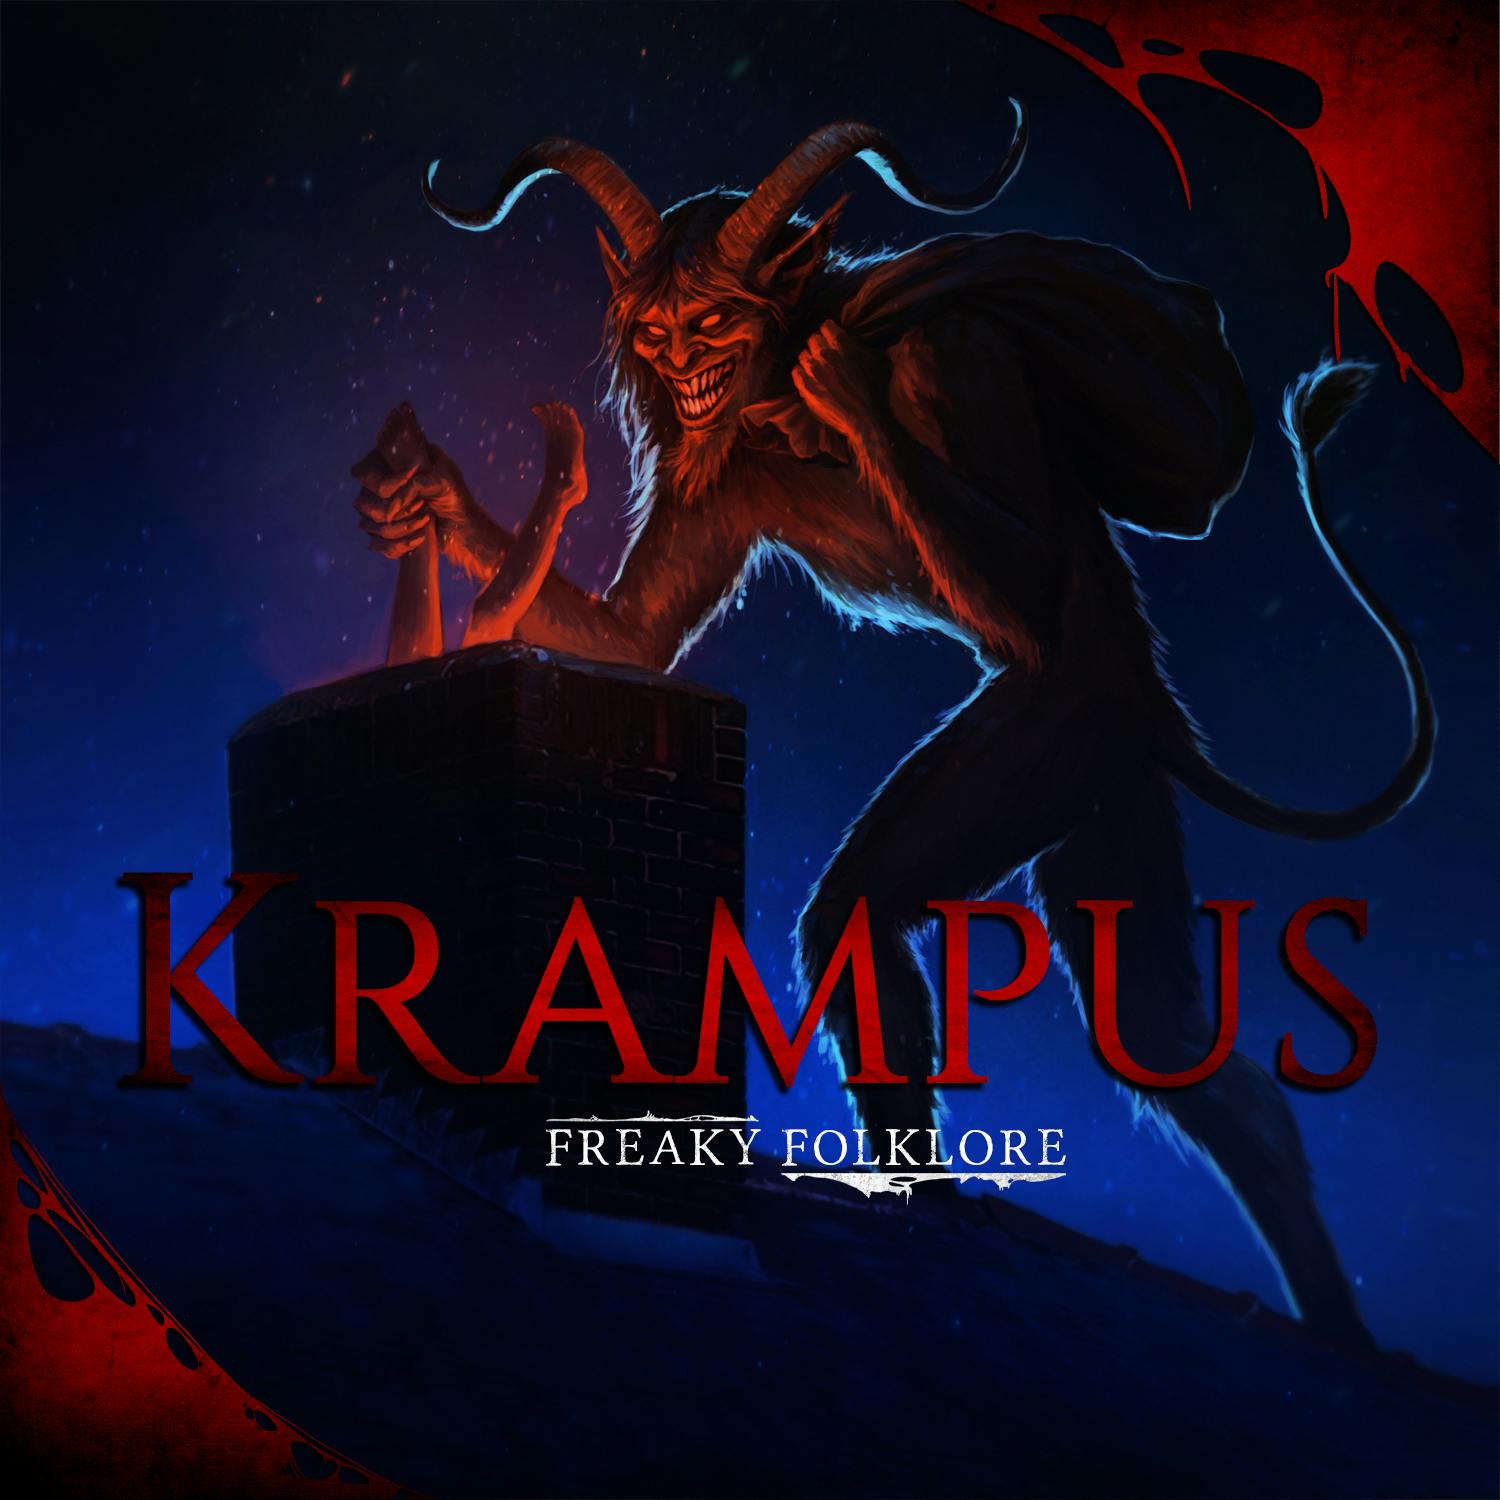 KRAMPUS - The Disturbing Version of Santa Claus